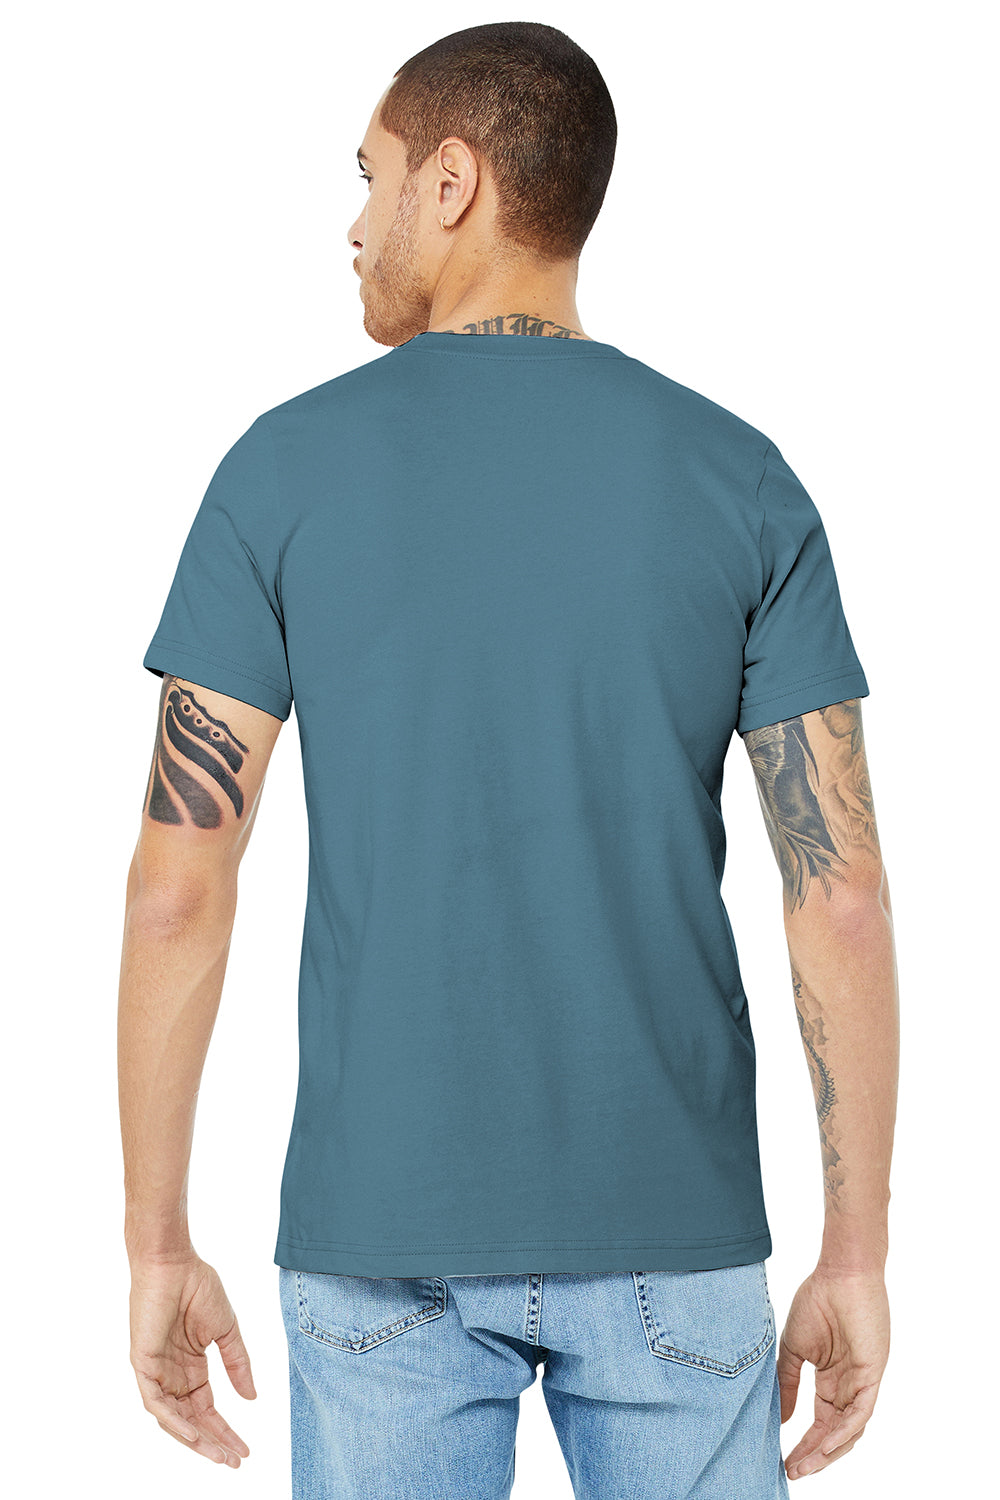 Bella + Canvas BC3001/3001C Mens Jersey Short Sleeve Crewneck T-Shirt Steel Blue Model Back